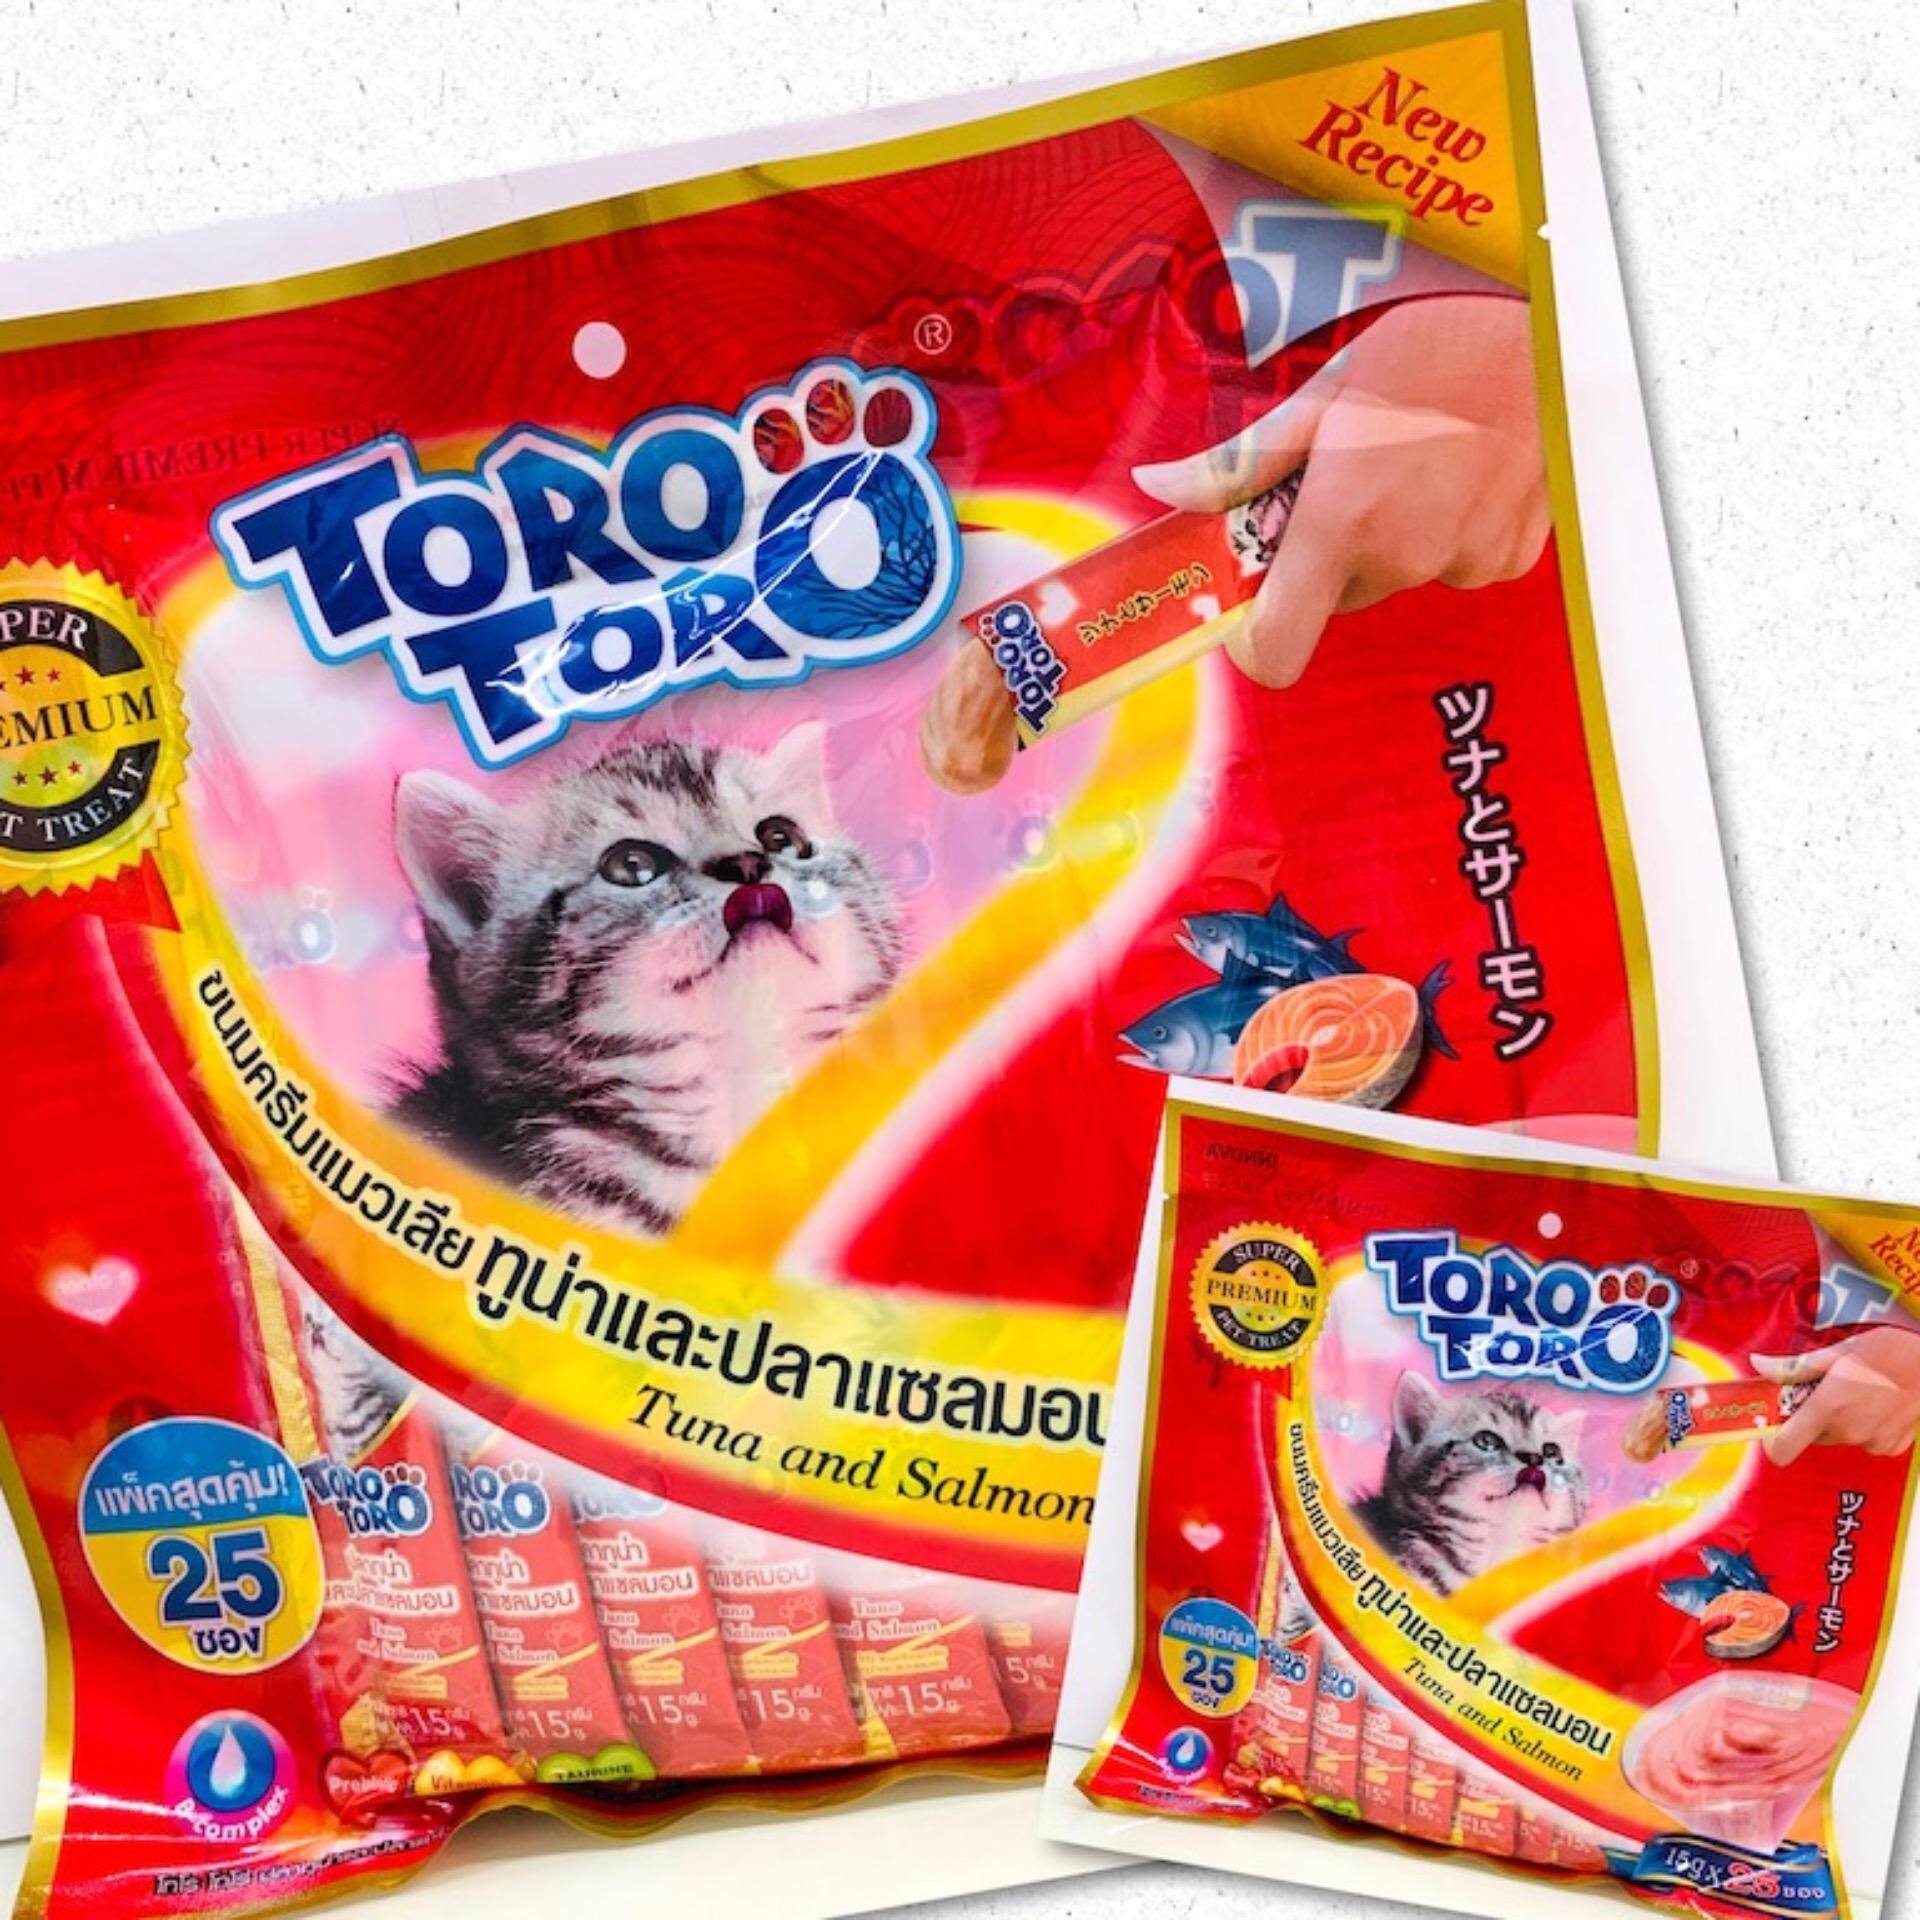 Toro Toro ขนมแมวเลีย ทูน่าและปลาแซลมอน (สีแดง)15gX25 ซอง